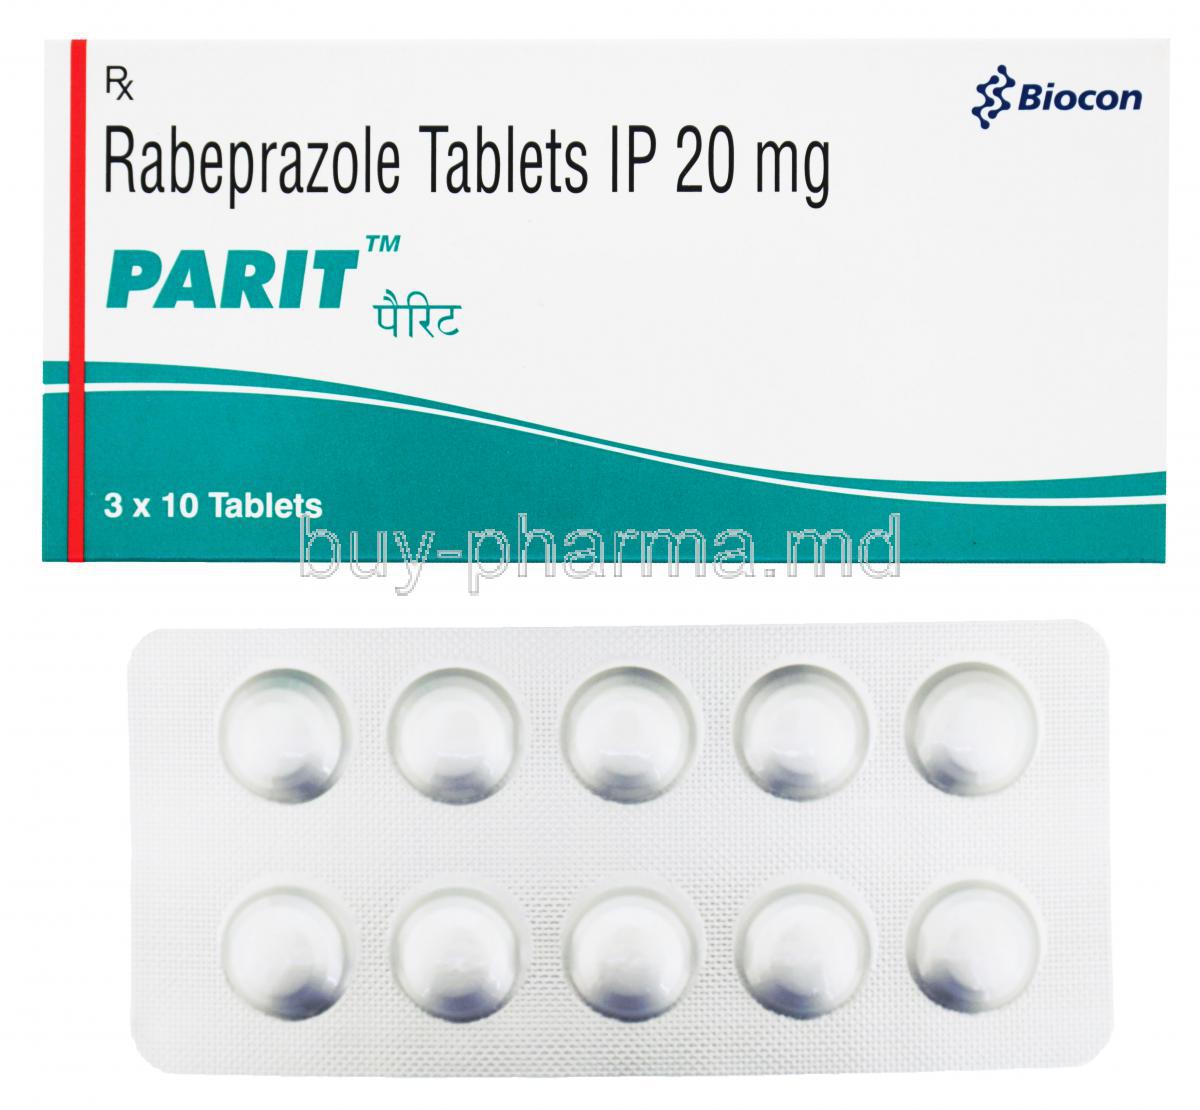 Parit, Rabeprazole tablets IP 20mg, 3 x 10 tablets, Biocon, box  and blister pack front presentation